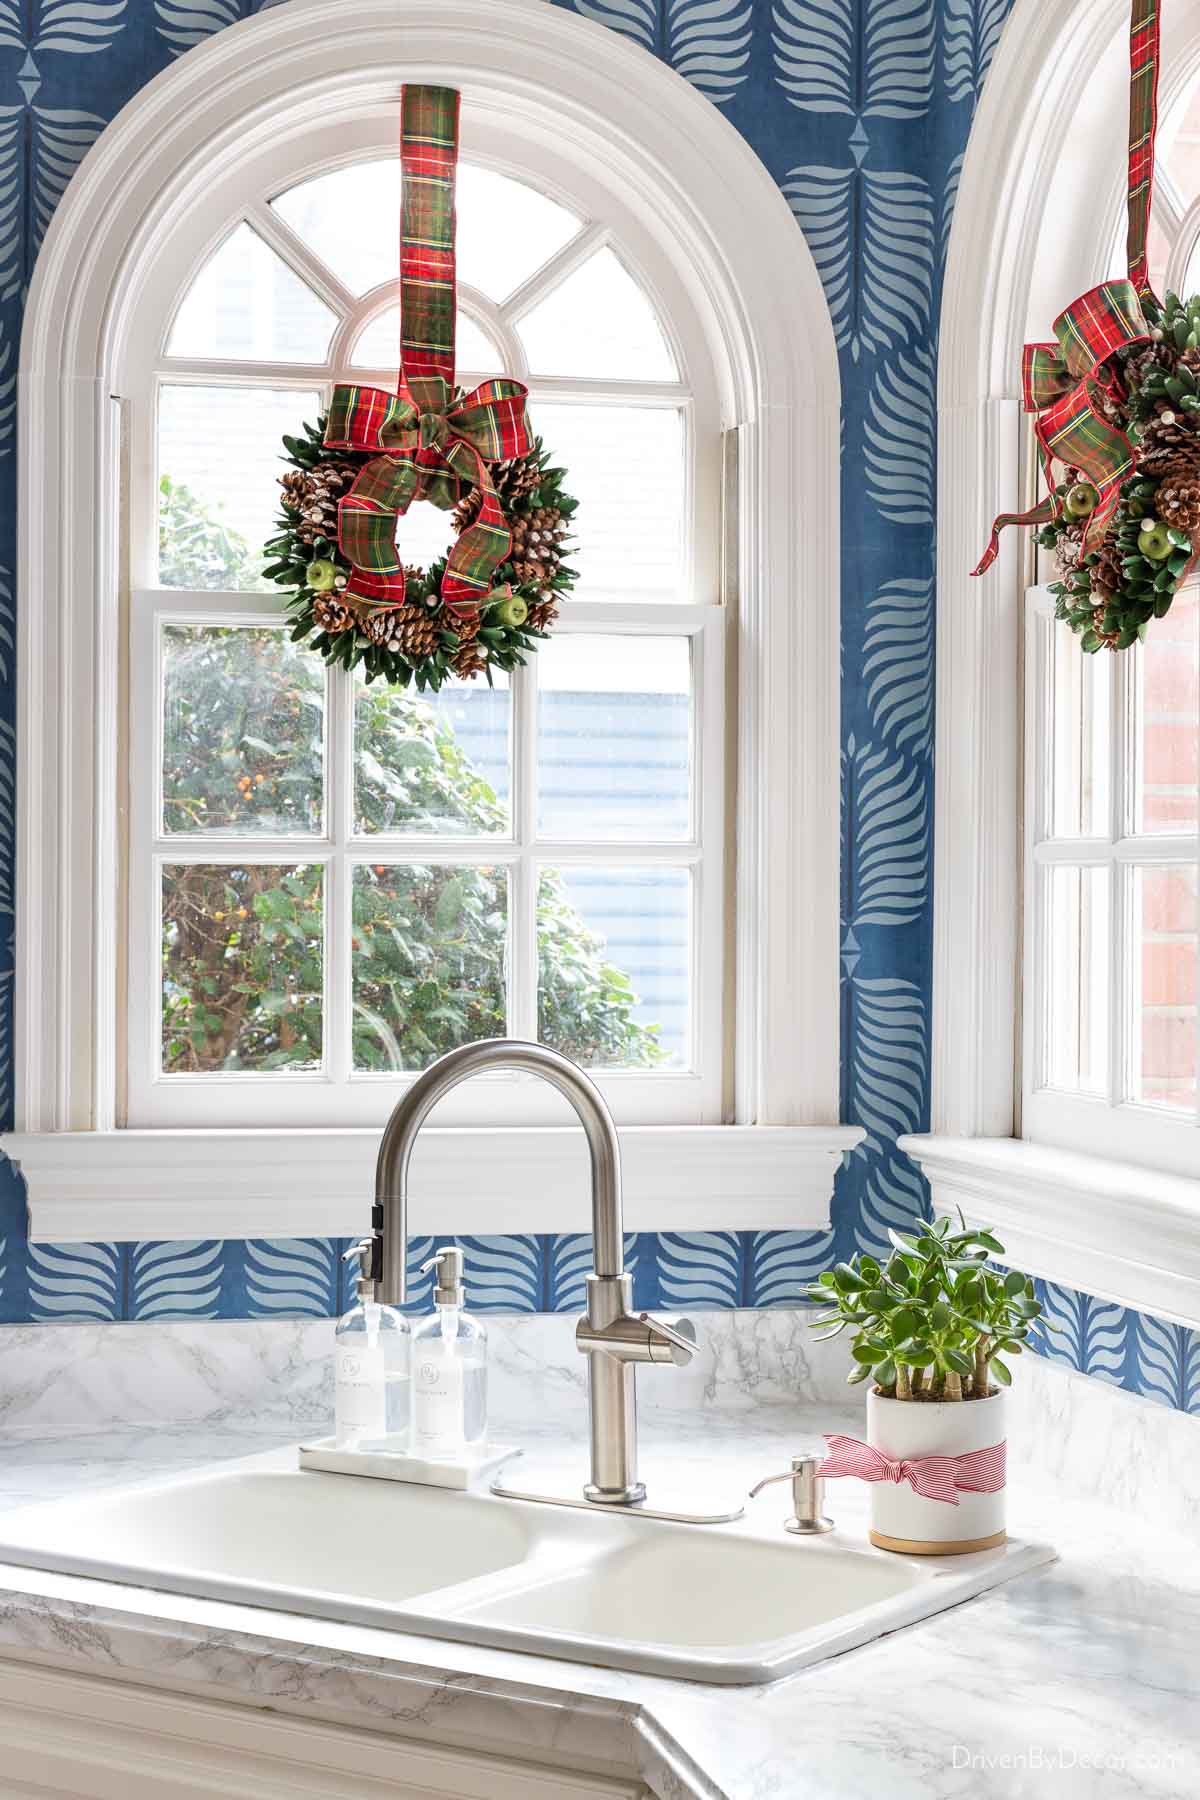 Mini Christmas wreaths layered over kitchen windows